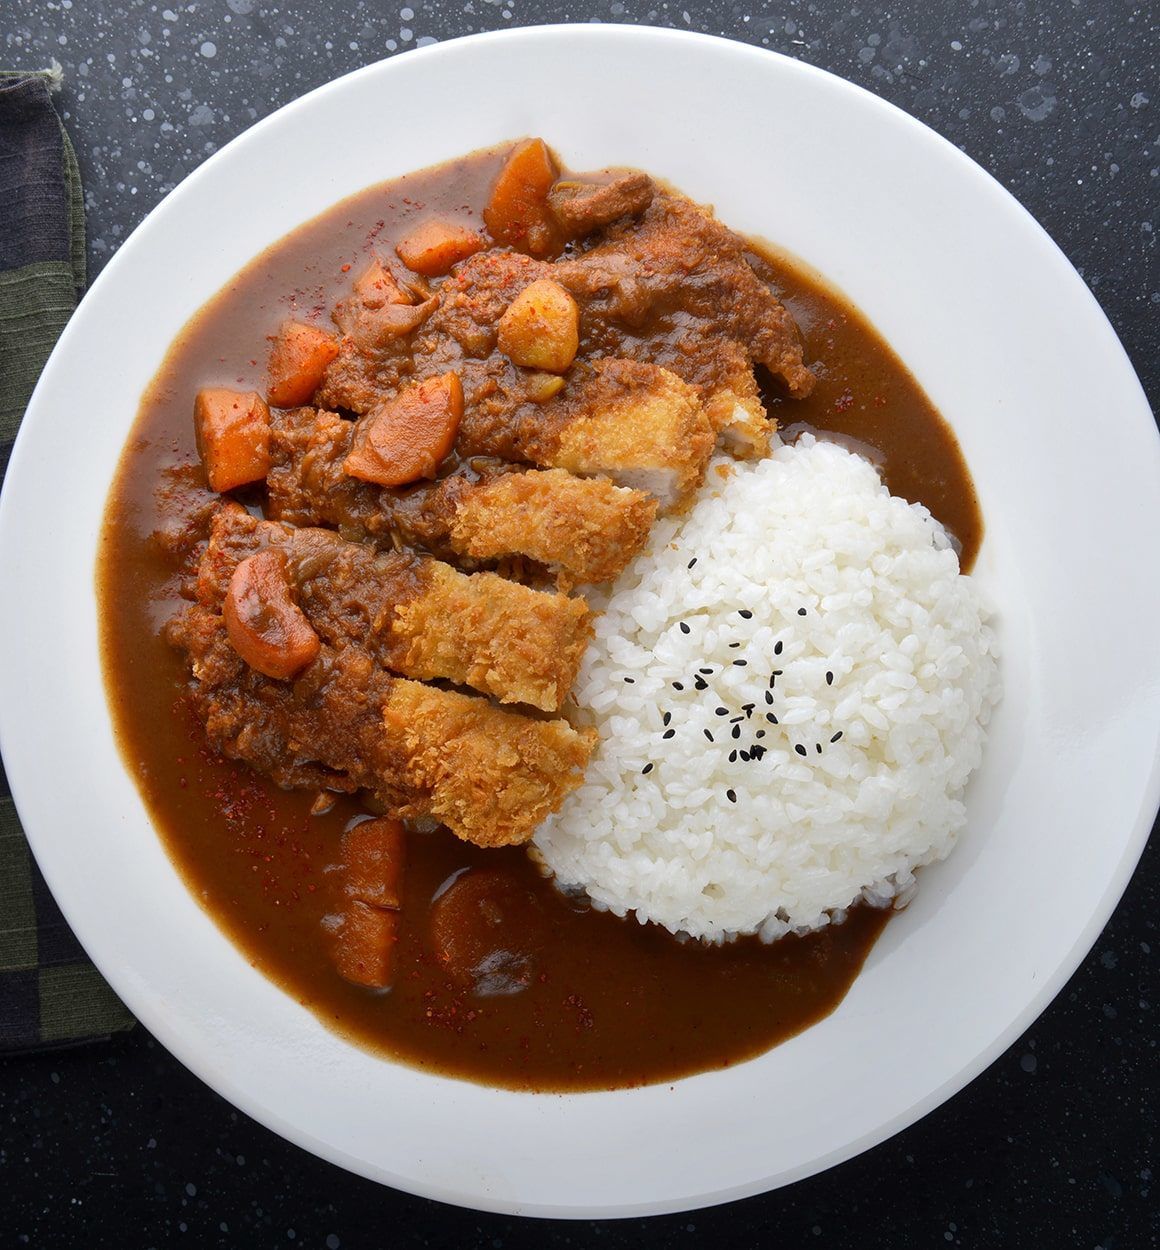 Wagamama Katsu Curry Meal Kit Reviews